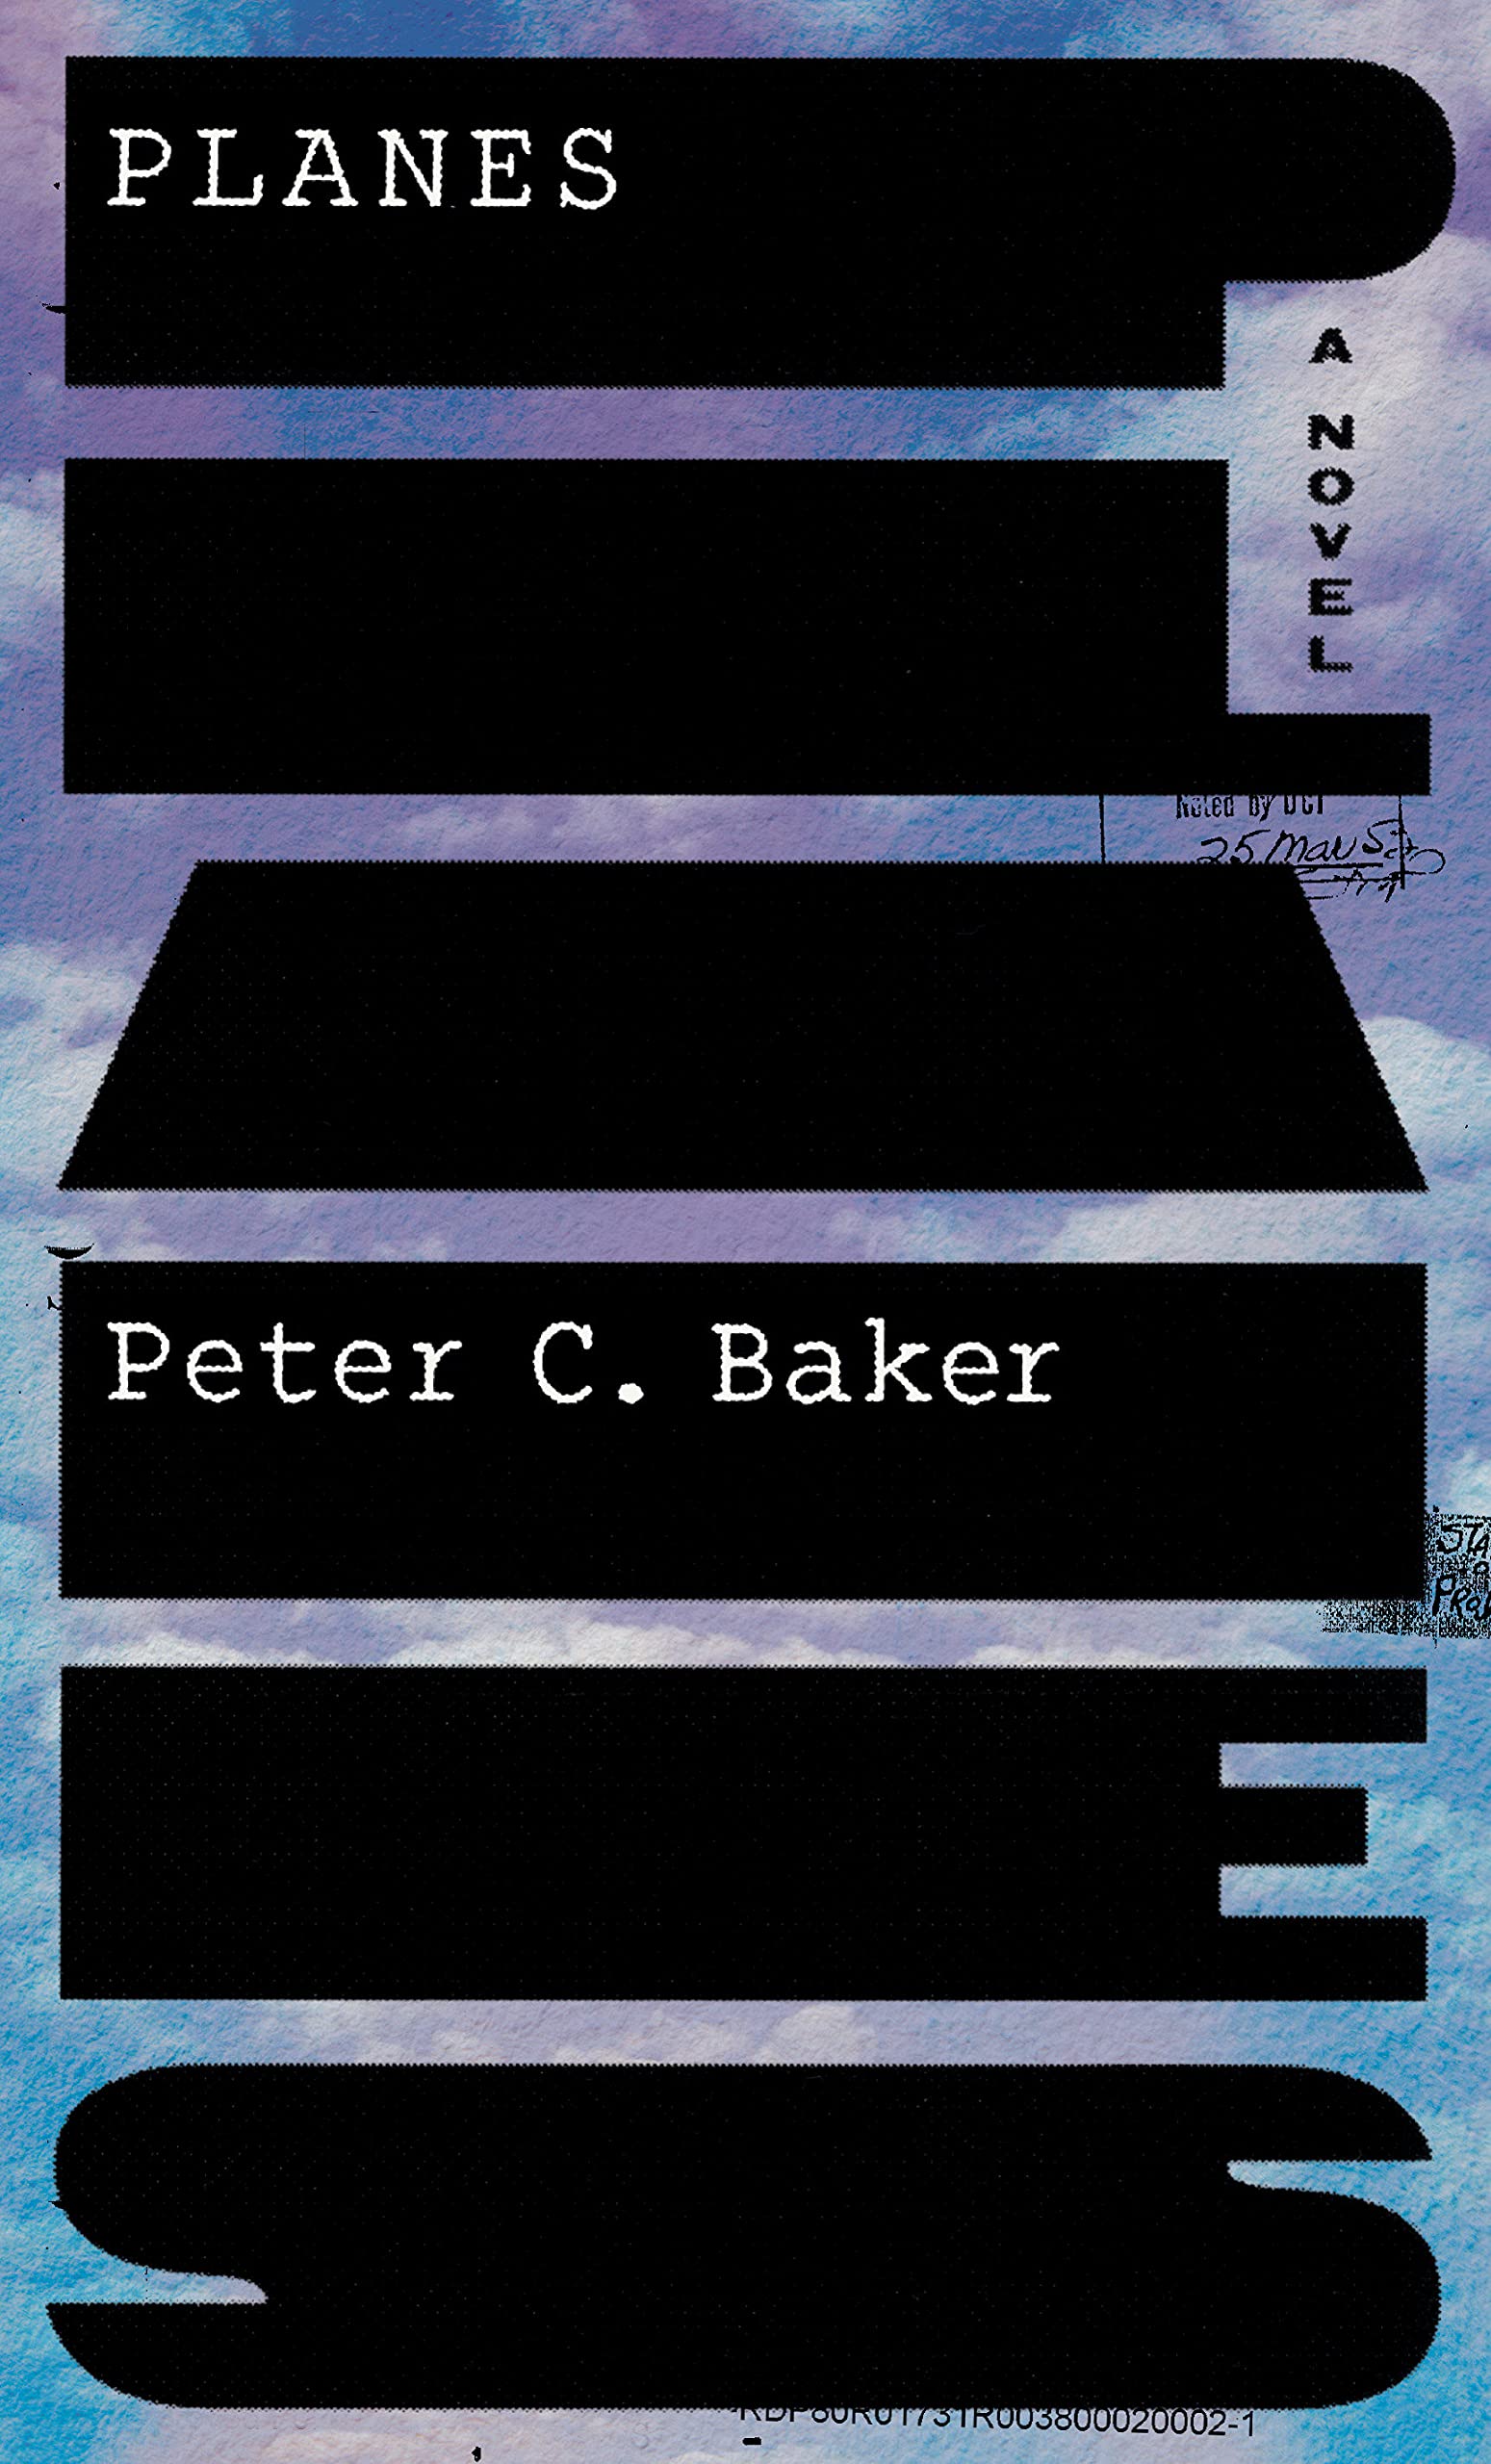 <strong>Peter C. Baker, <a class="external" href="https://bookshop.org/a/40/9780593320273" target="_blank" rel="noopener"><em>Planes</em></a></strong> (Cover design by Linda Huang; Knopf, May 31)